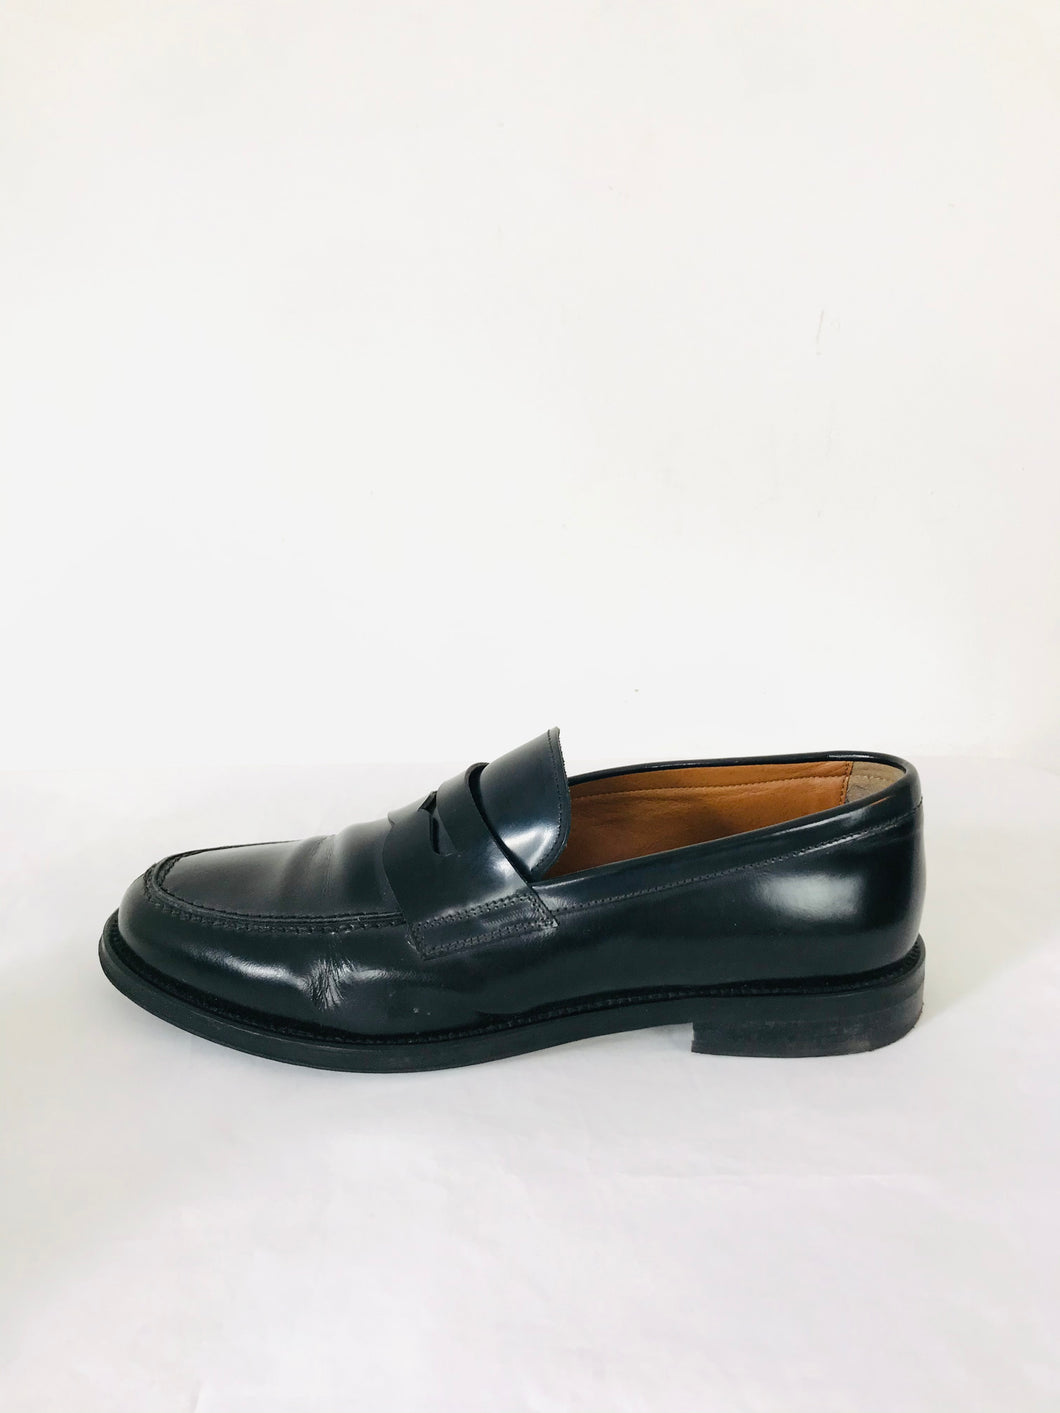 Aldo Mr. B’s Men’s Patent Leather Loafer | UK7 | Black